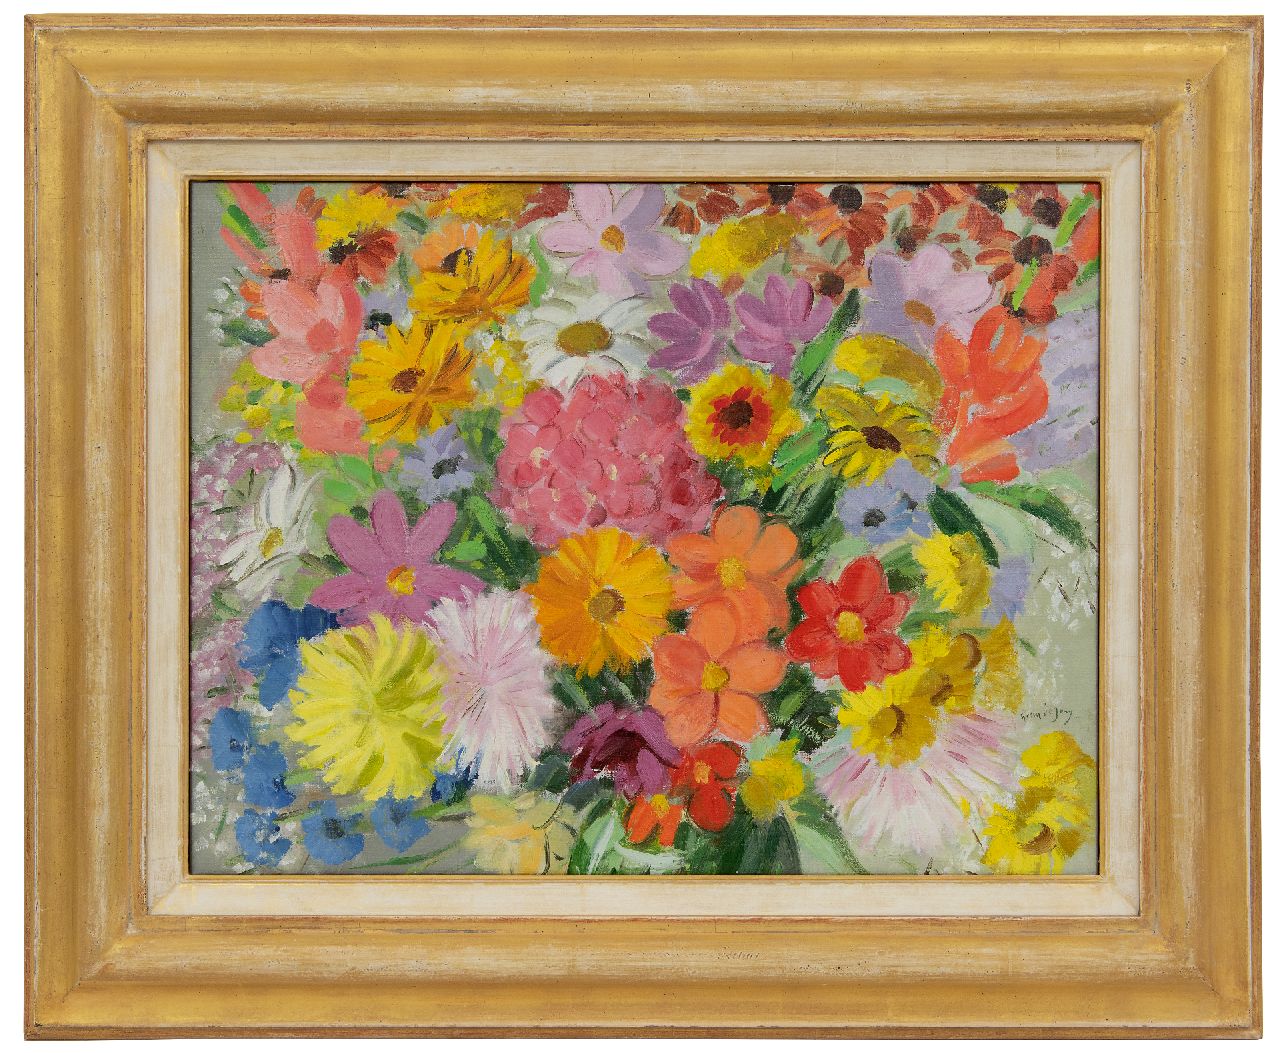 Jong G. de | Gerben 'Germ' de Jong | Gemälde zum Verkauf angeboten | Sommer Blumen, Öl auf Leinwand 47,3 x 62,4 cm, Unterzeichnet r.u.